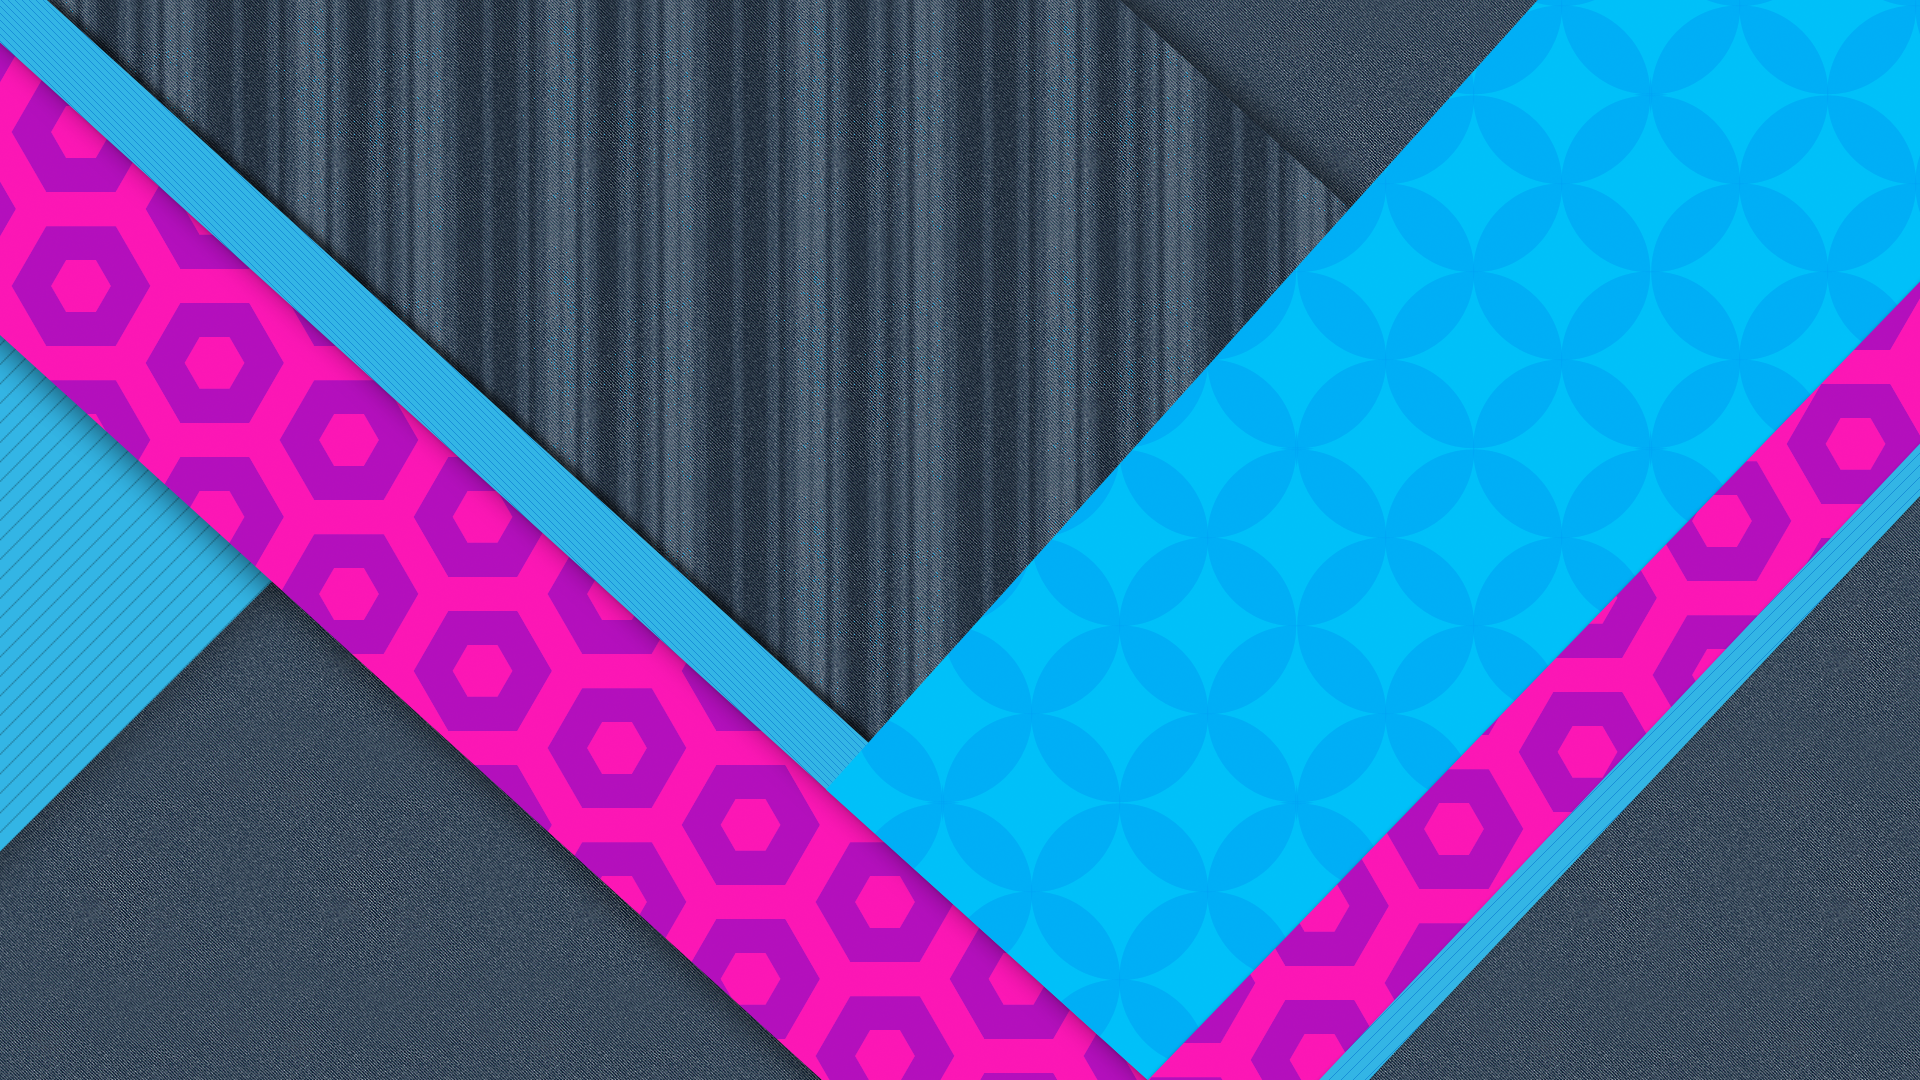 material design wallpapers desktop,turquoise,pink,pattern,textile,line